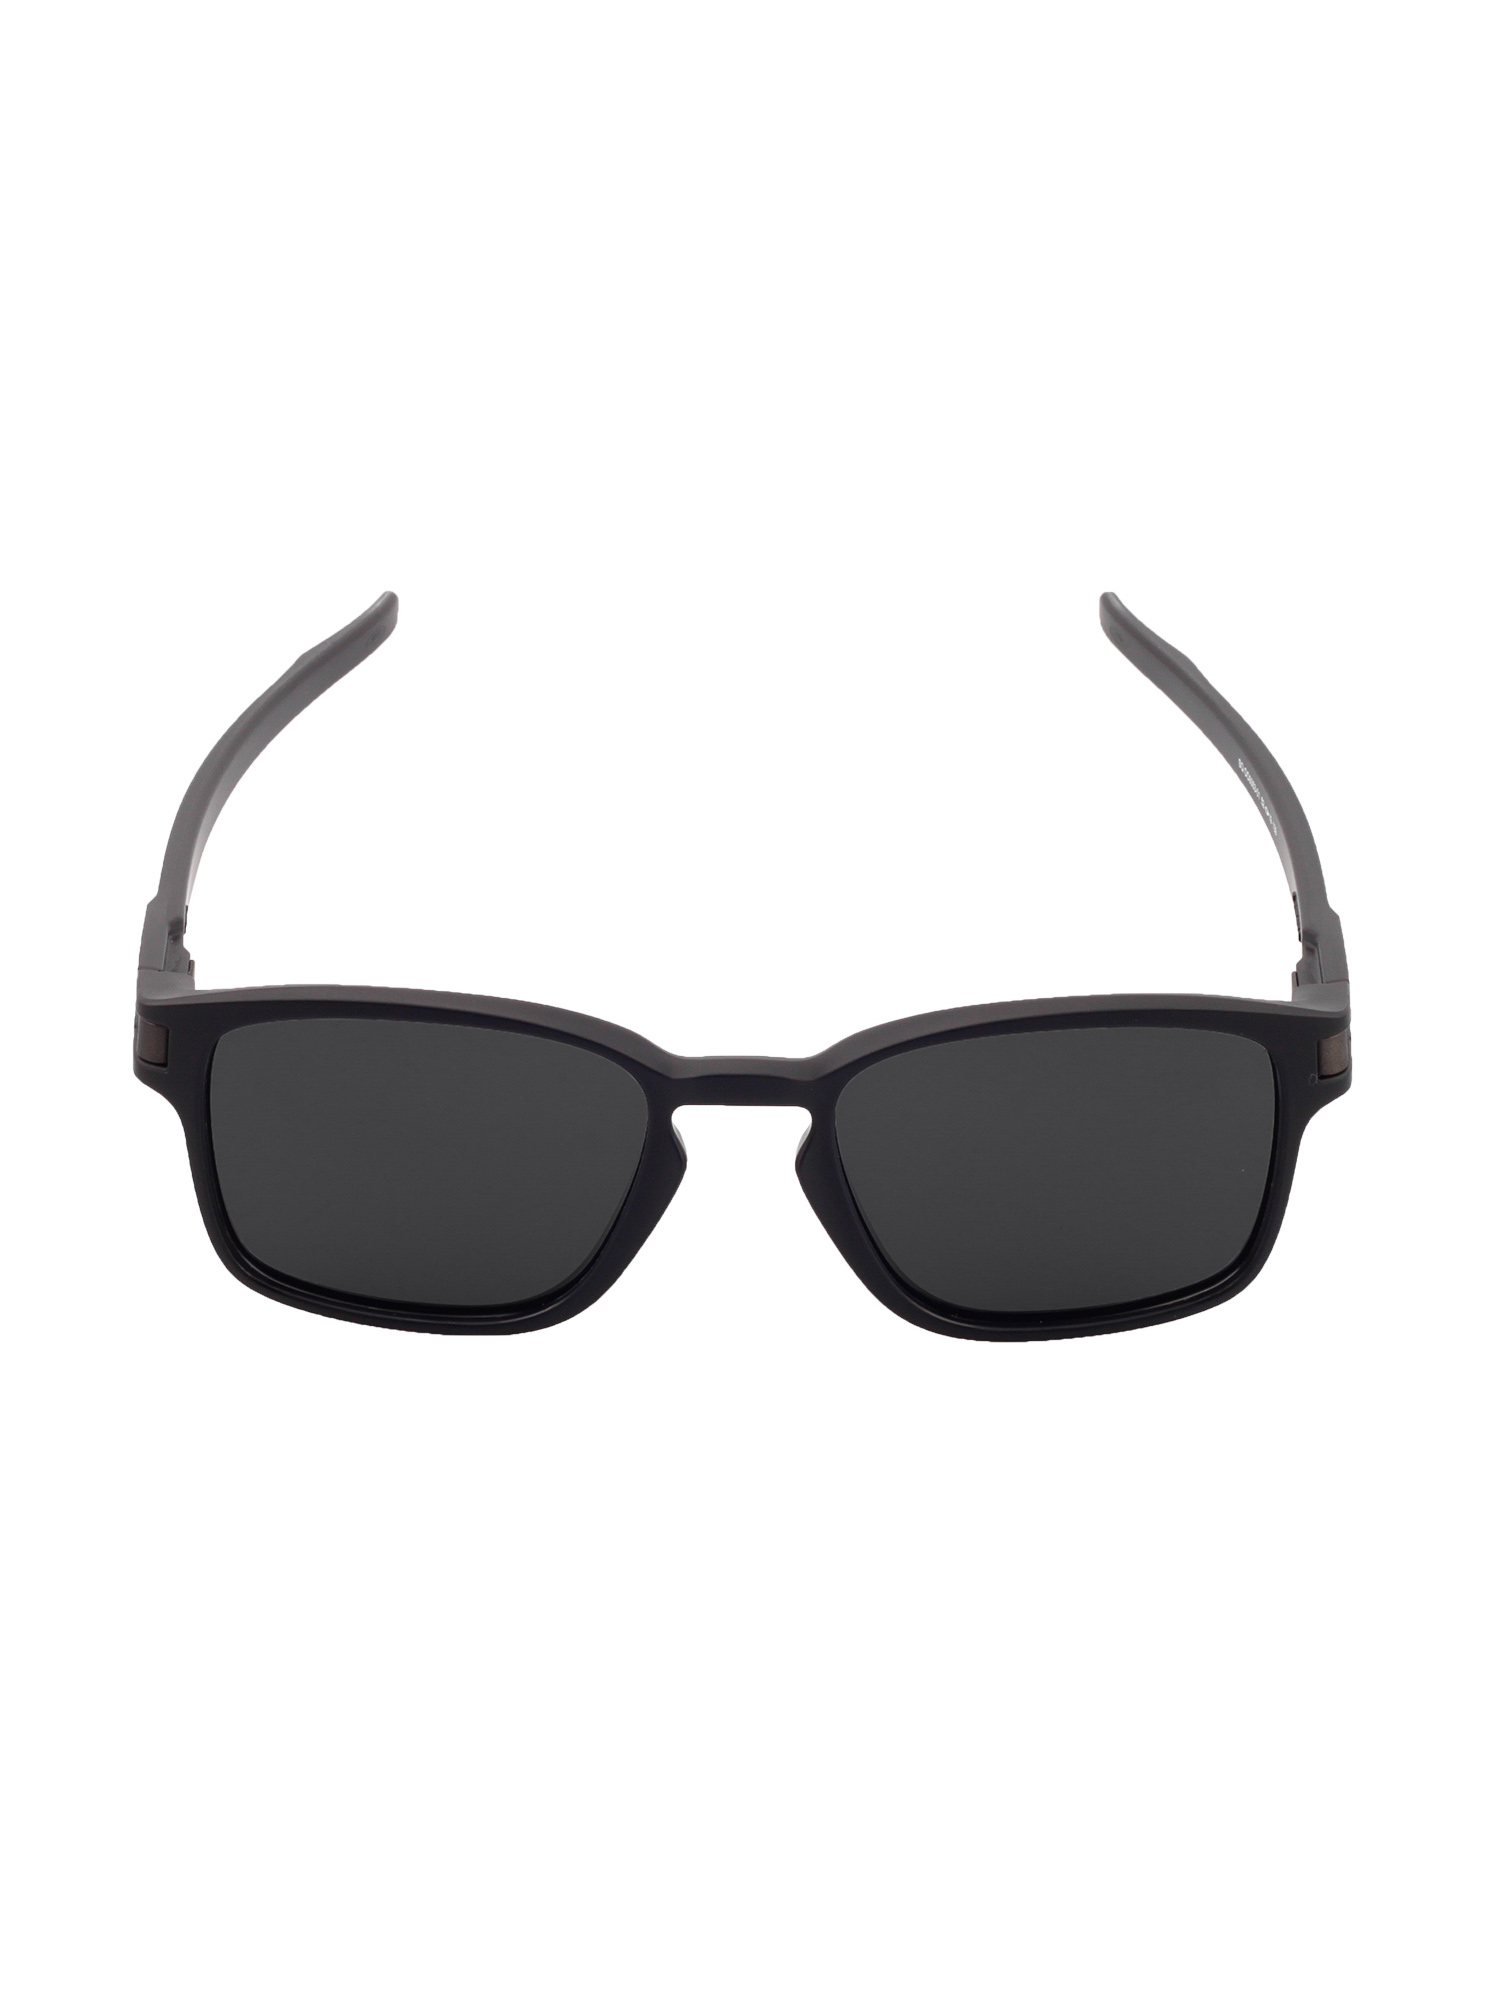 Walleva Polarized Titanium + Black Replacement Lenses For Oakley Latch SQ Sunglasses - image 5 of 6